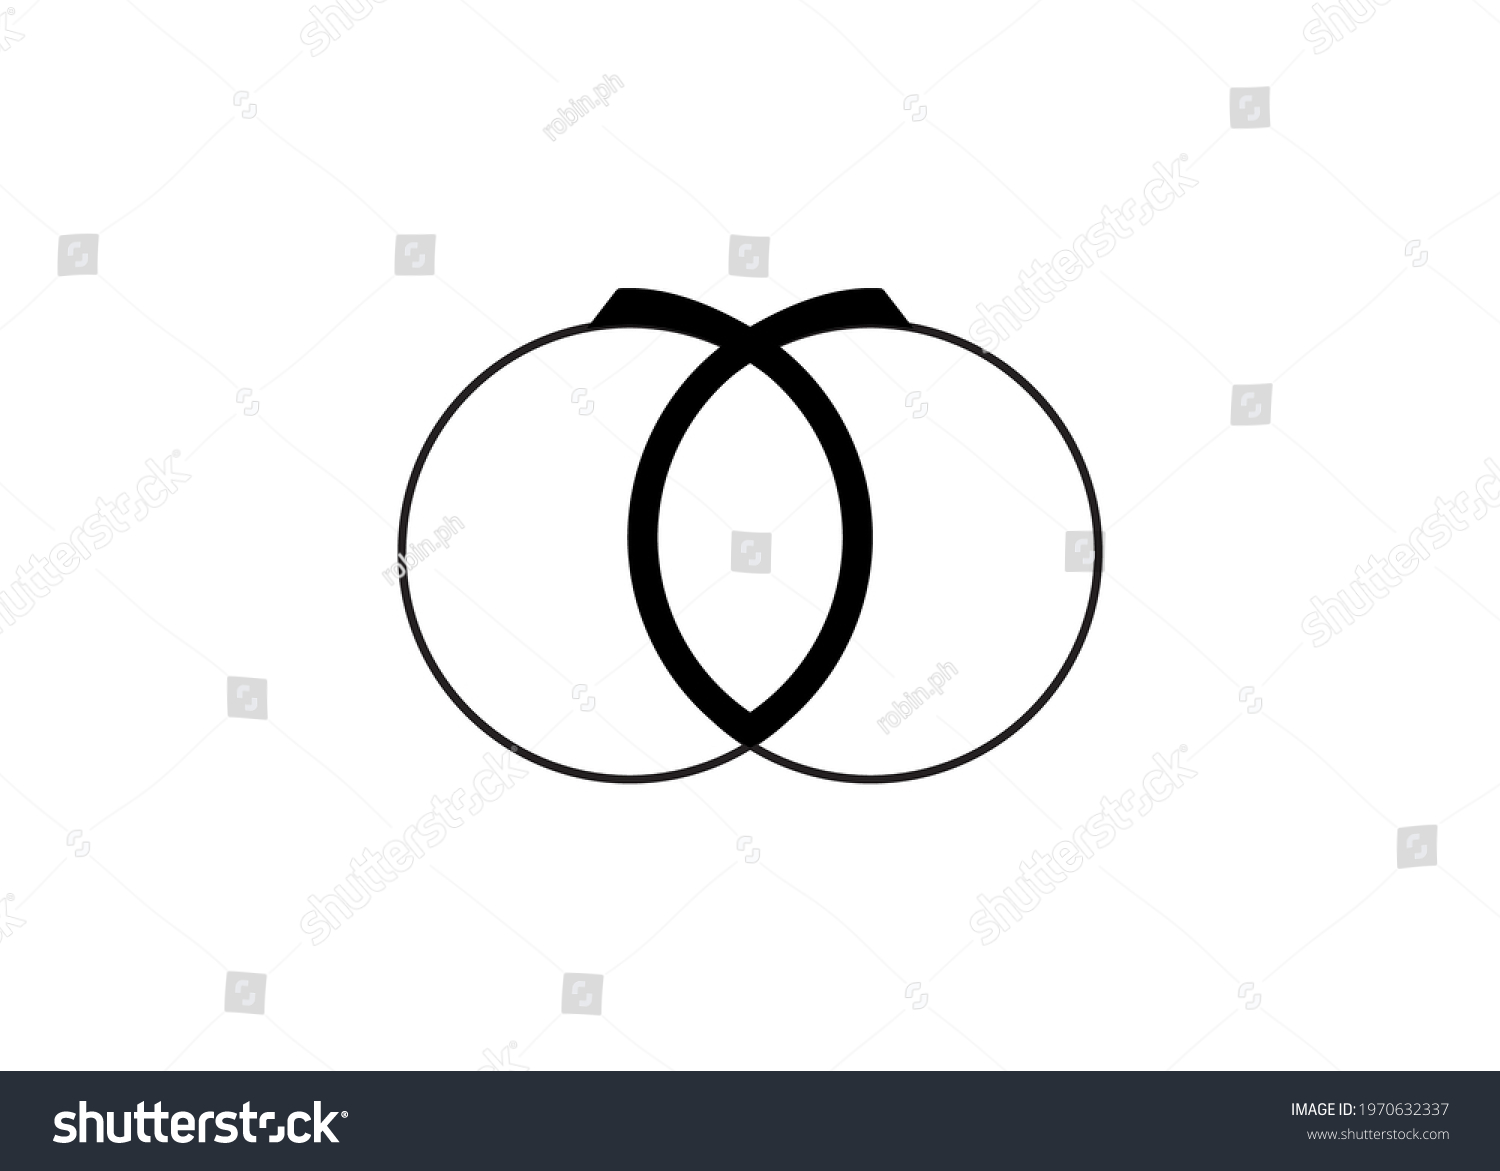 1,533 Vagina logo Images, Stock Photos & Vectors | Shutterstock